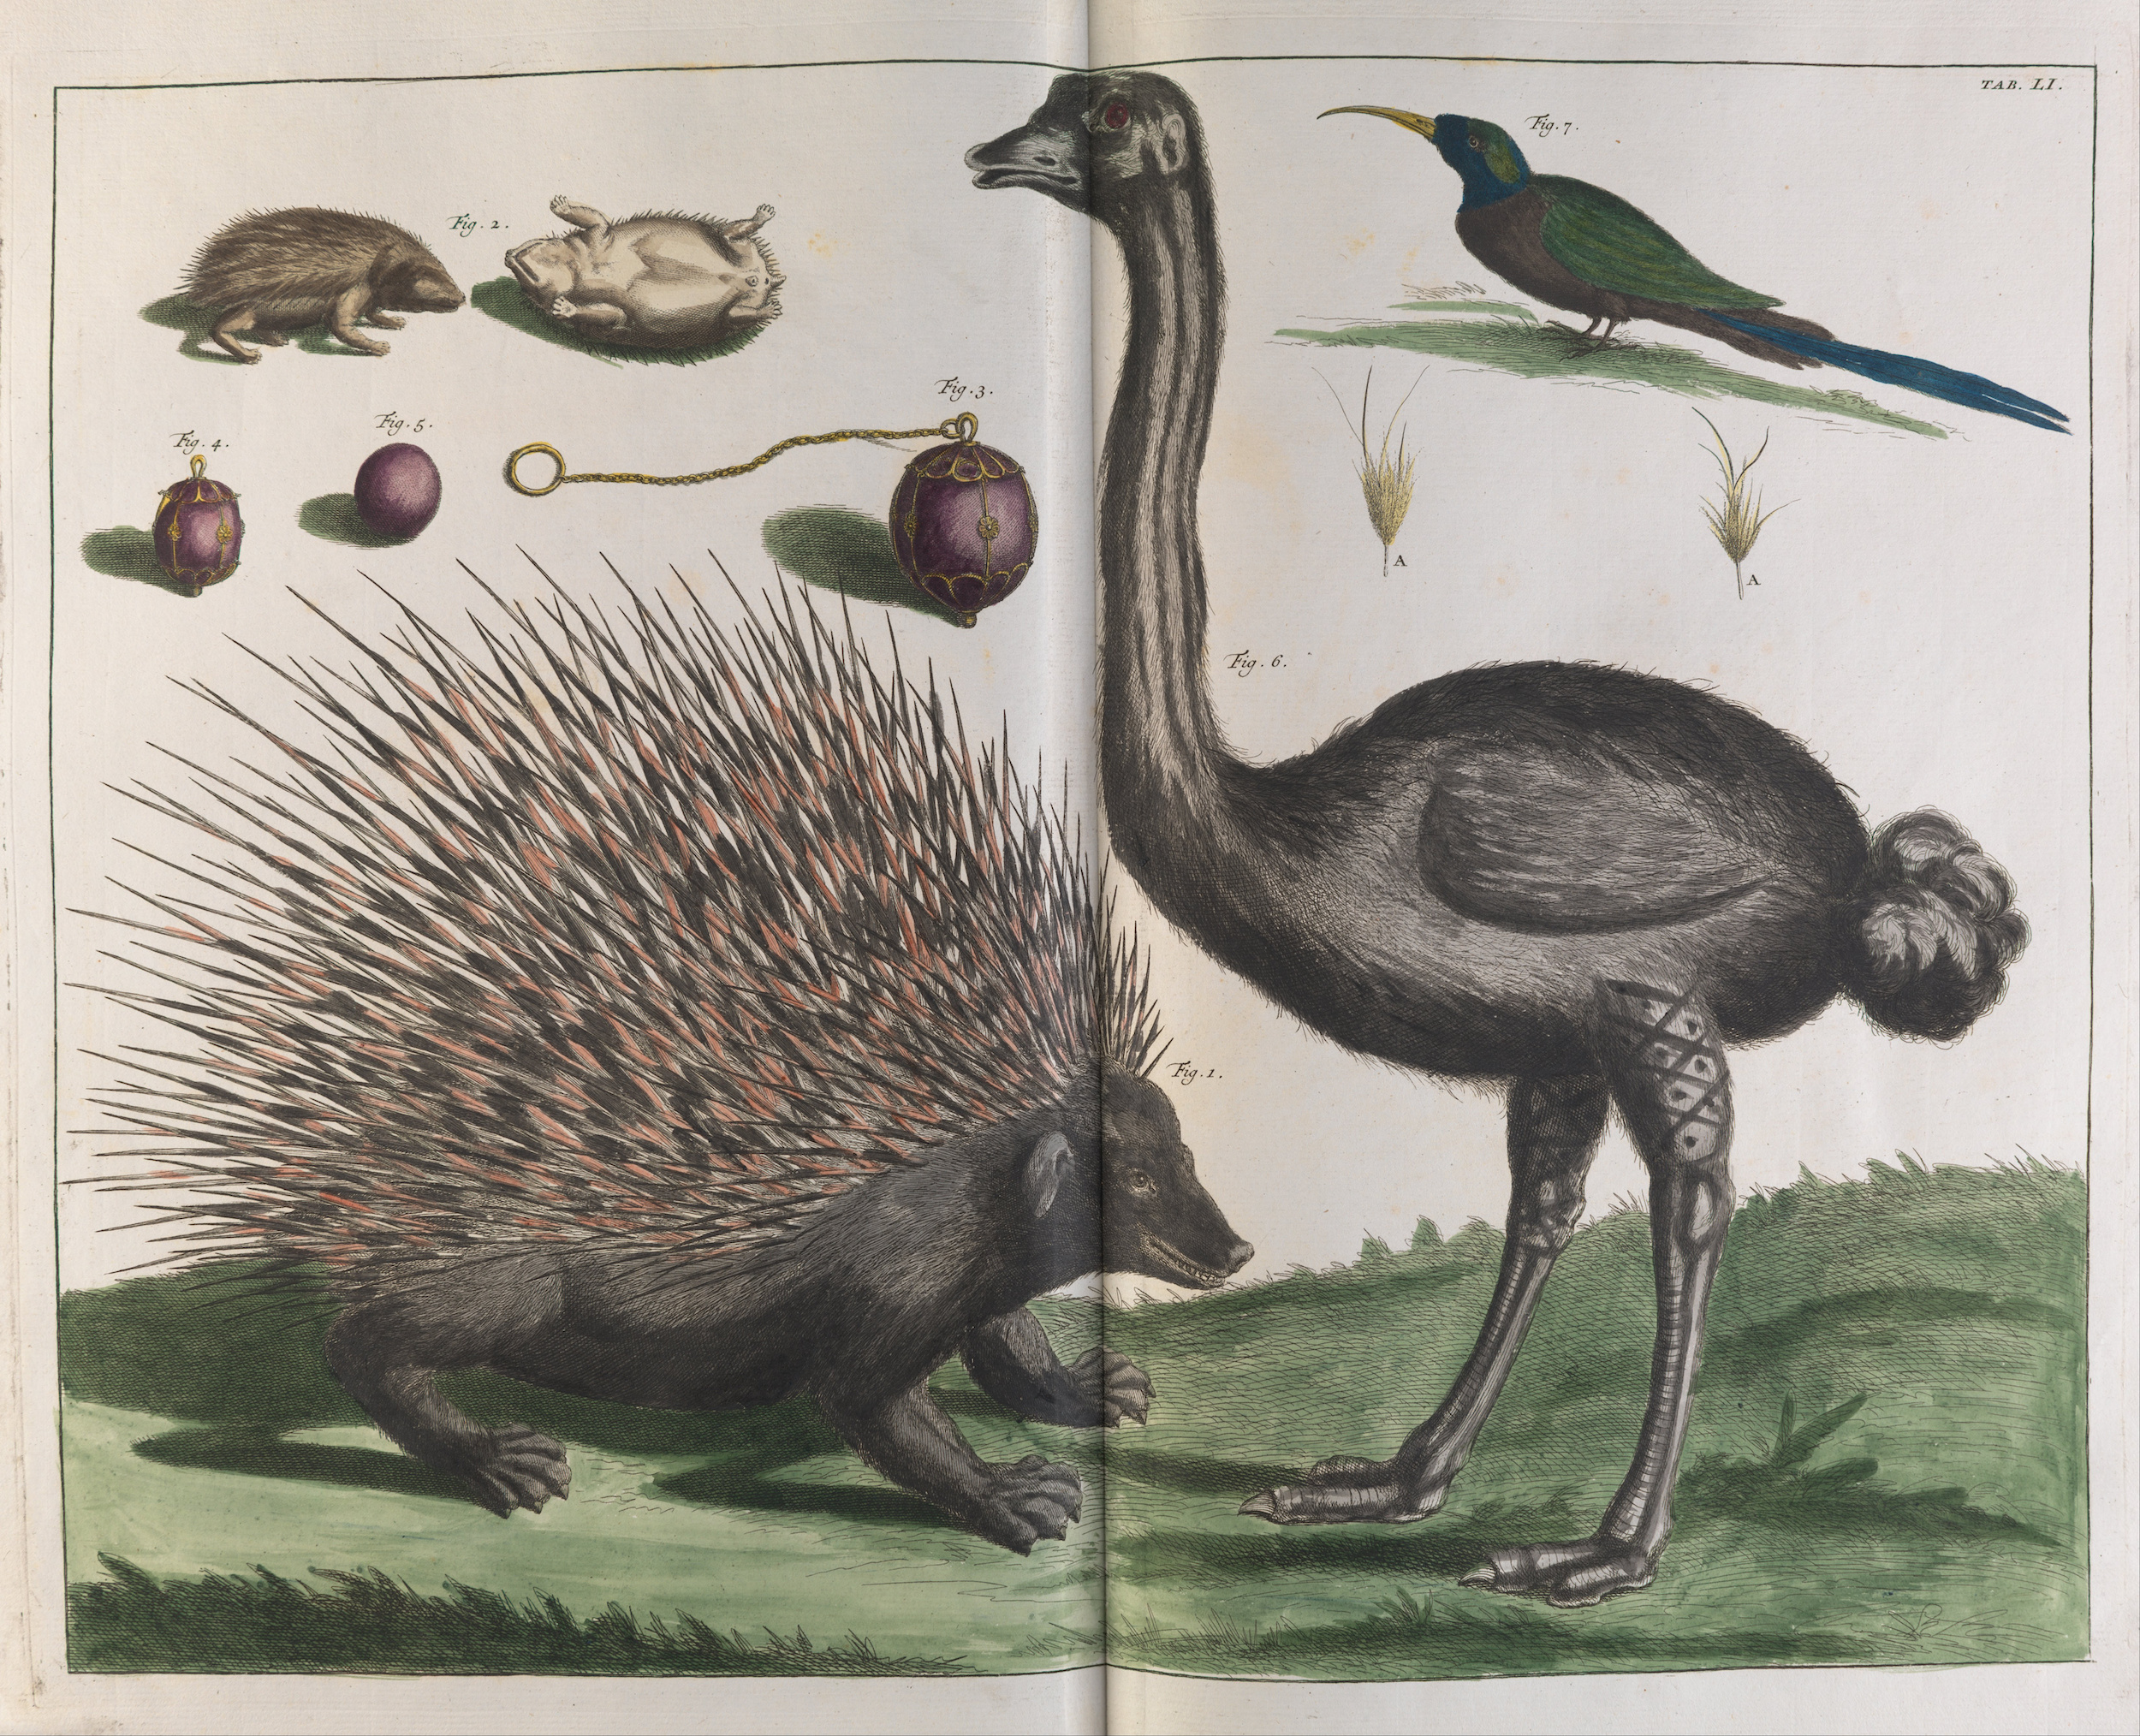 Malacca Hedgehog, Erinaceus malaccensis, and Ostrich, Struthio carmelis by Albertus Seba - 1734 - 670 x 530 mm Museum Victoria